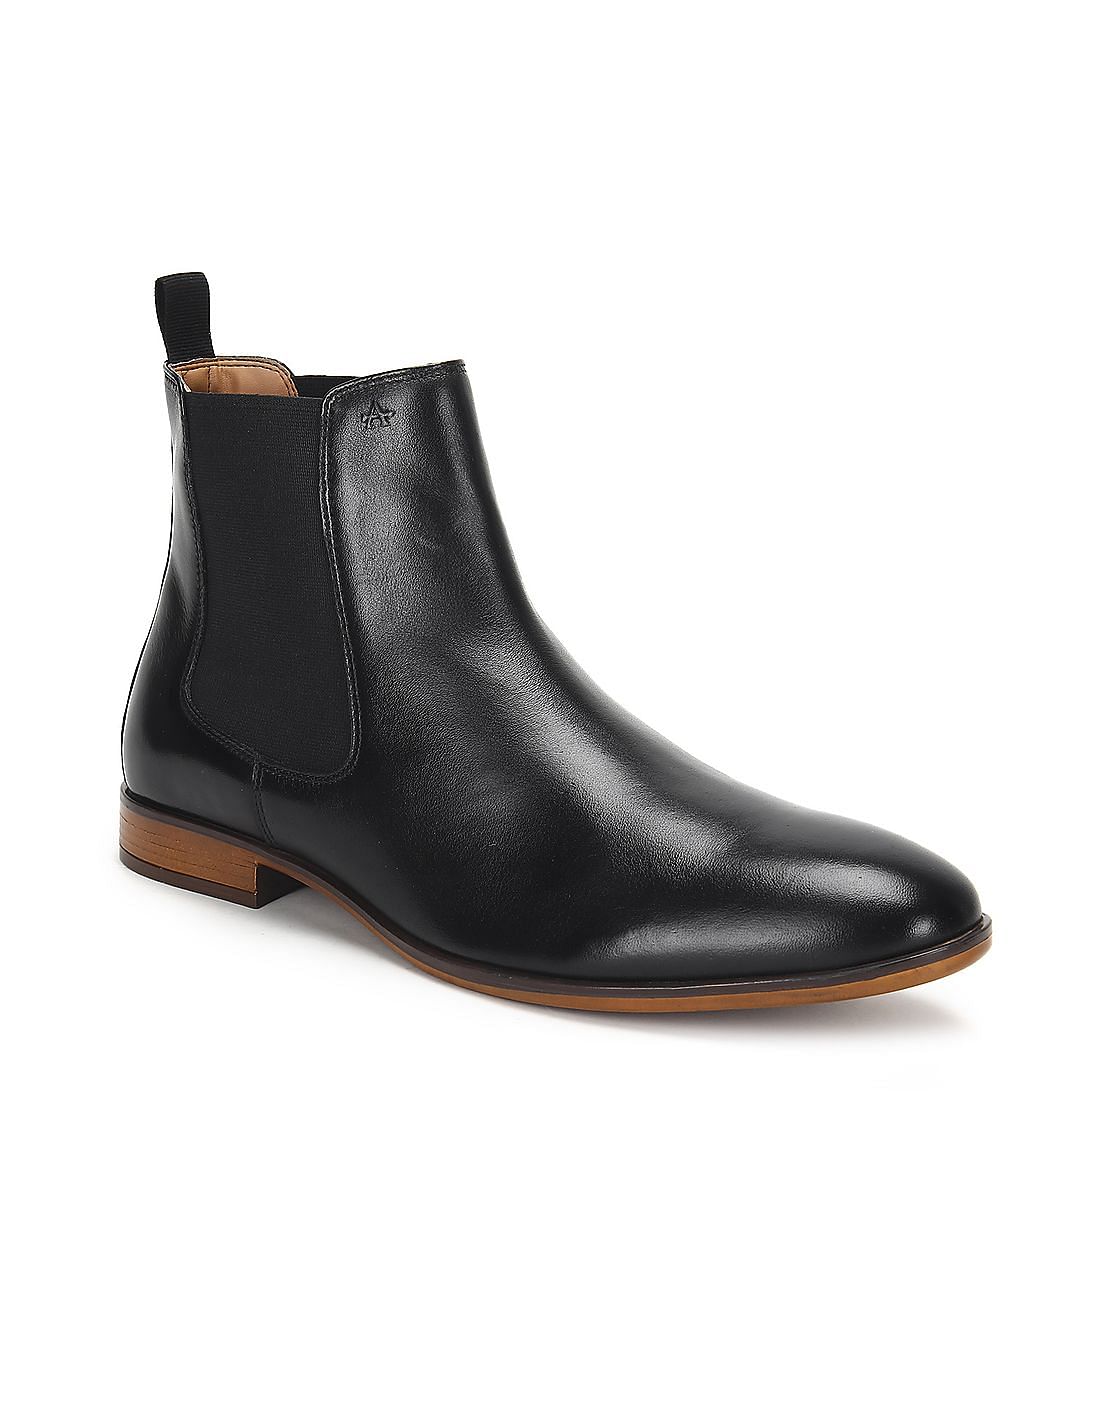 Buy Arrow Round Toe Leather Monroy Boots - NNNOW.com